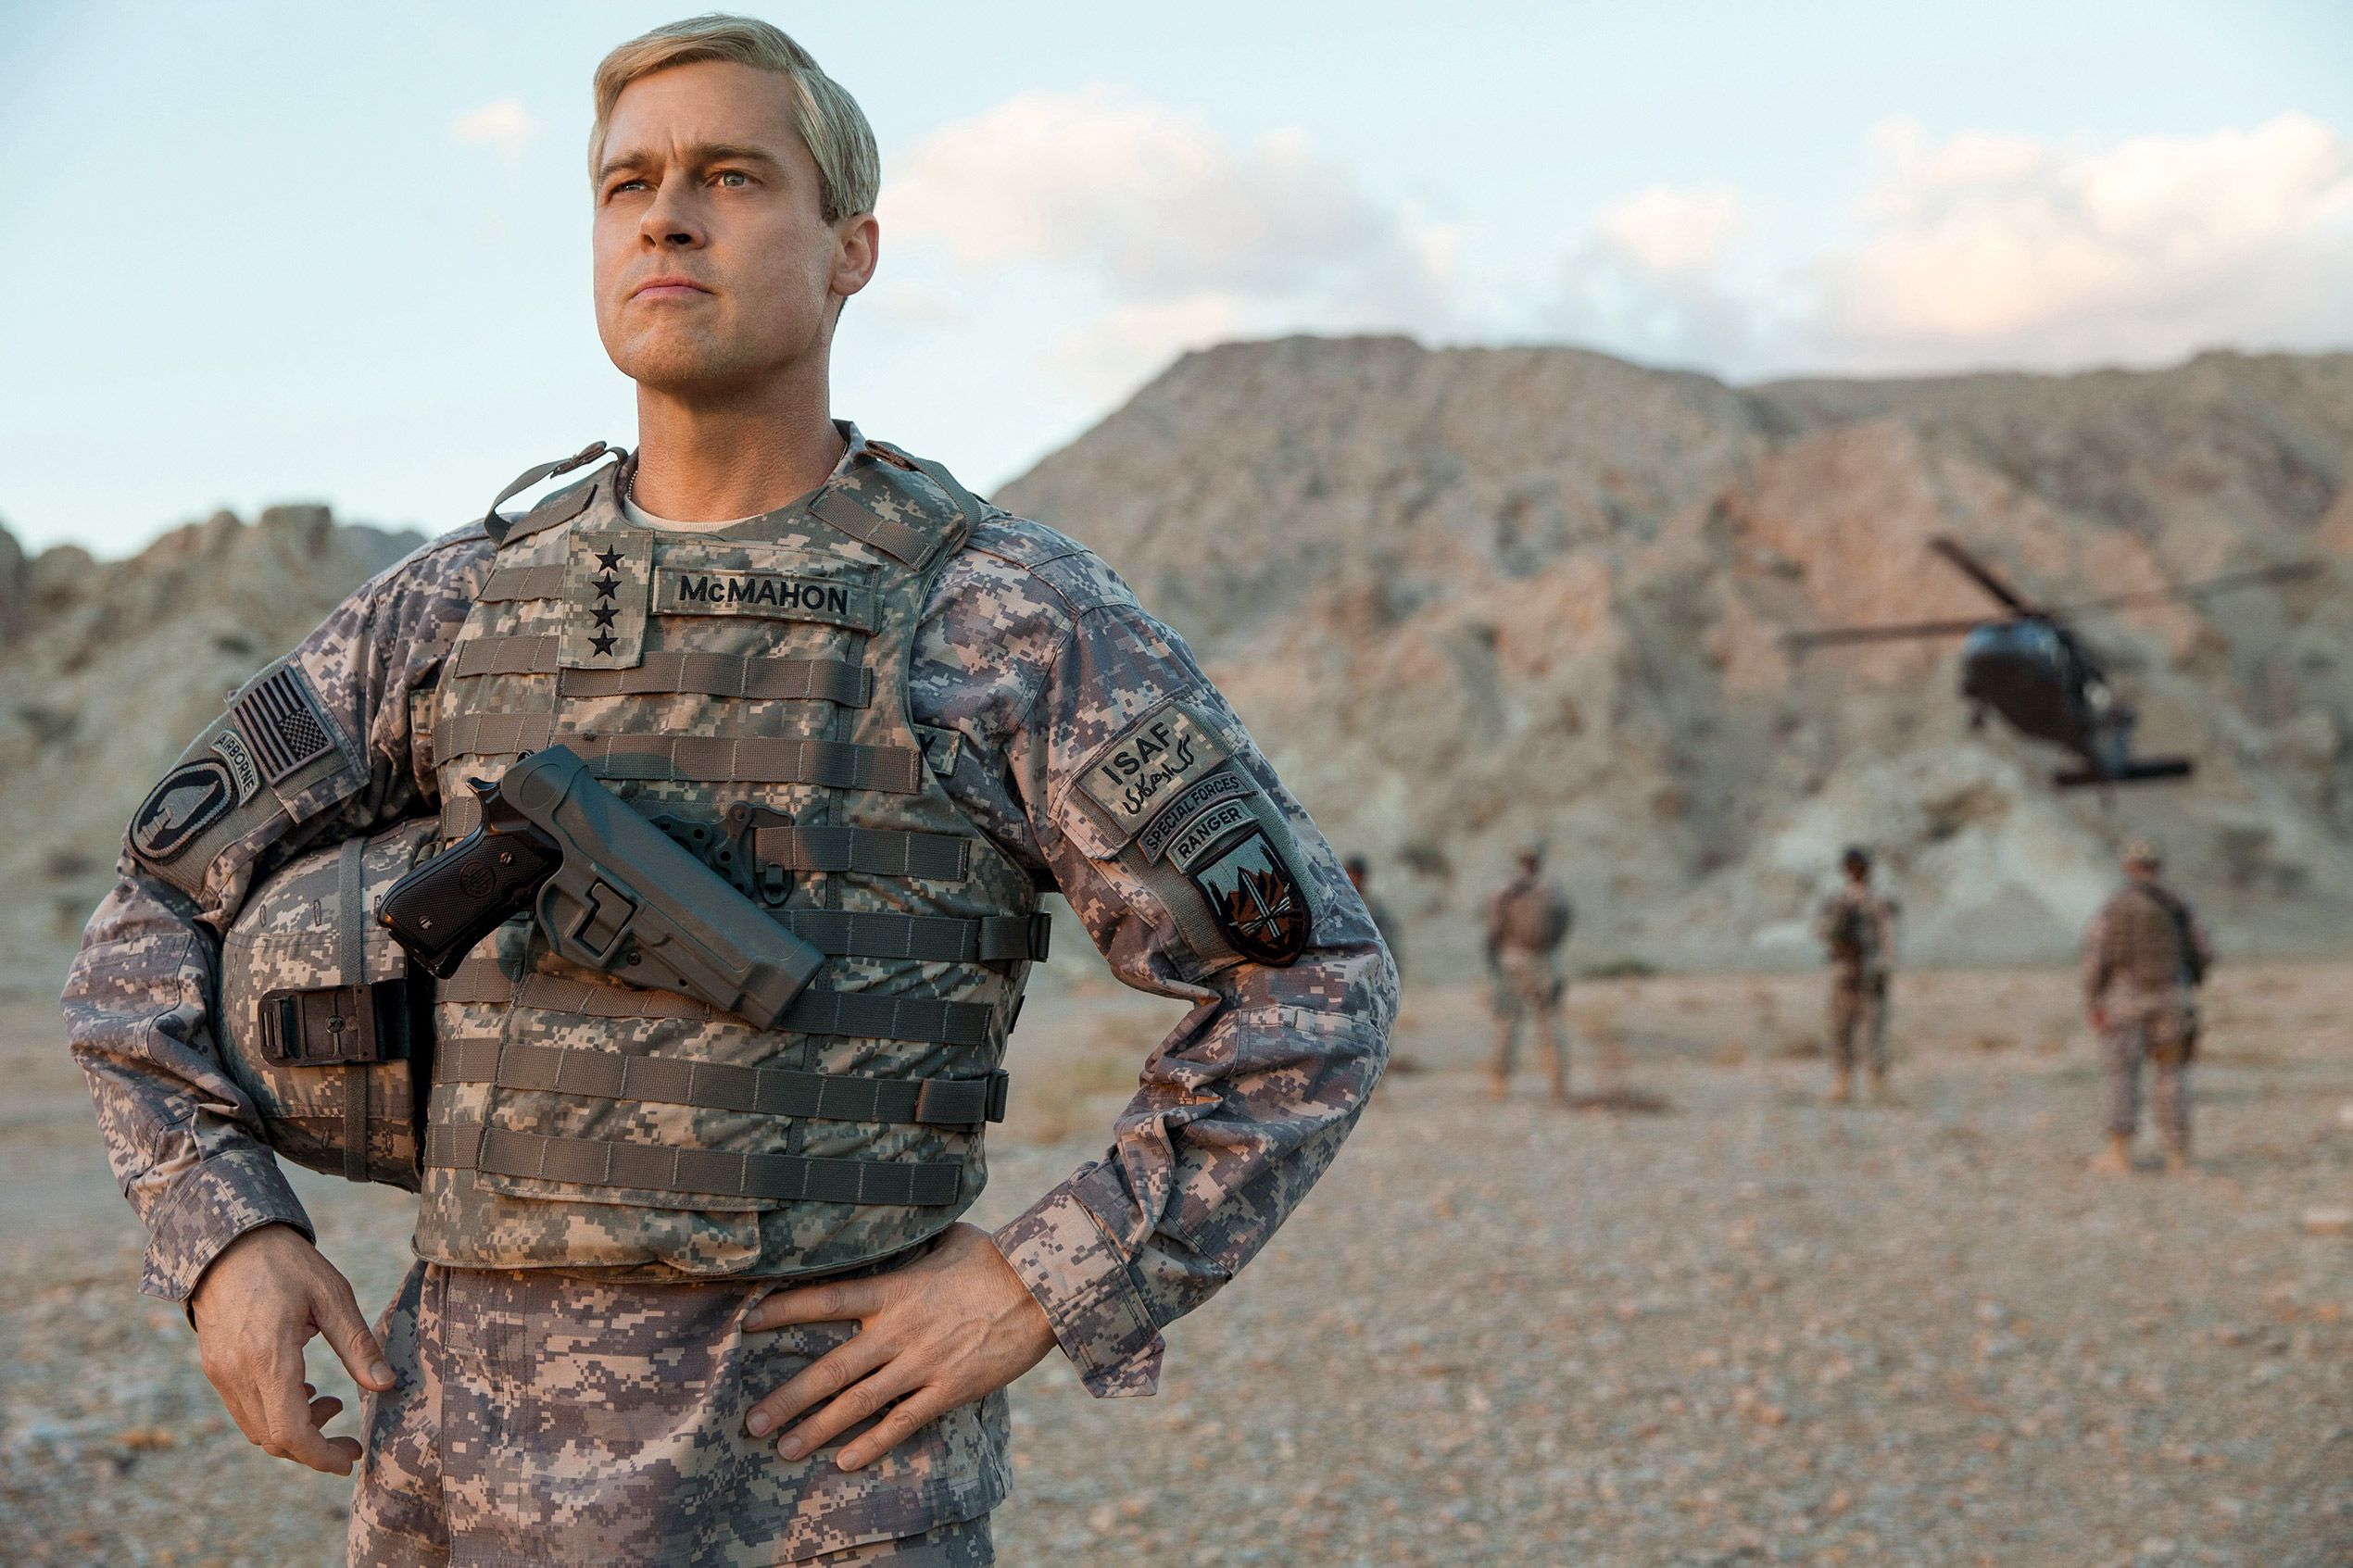 15 Best War Movies On Netflix 2020 Top War Movies Streaming Now